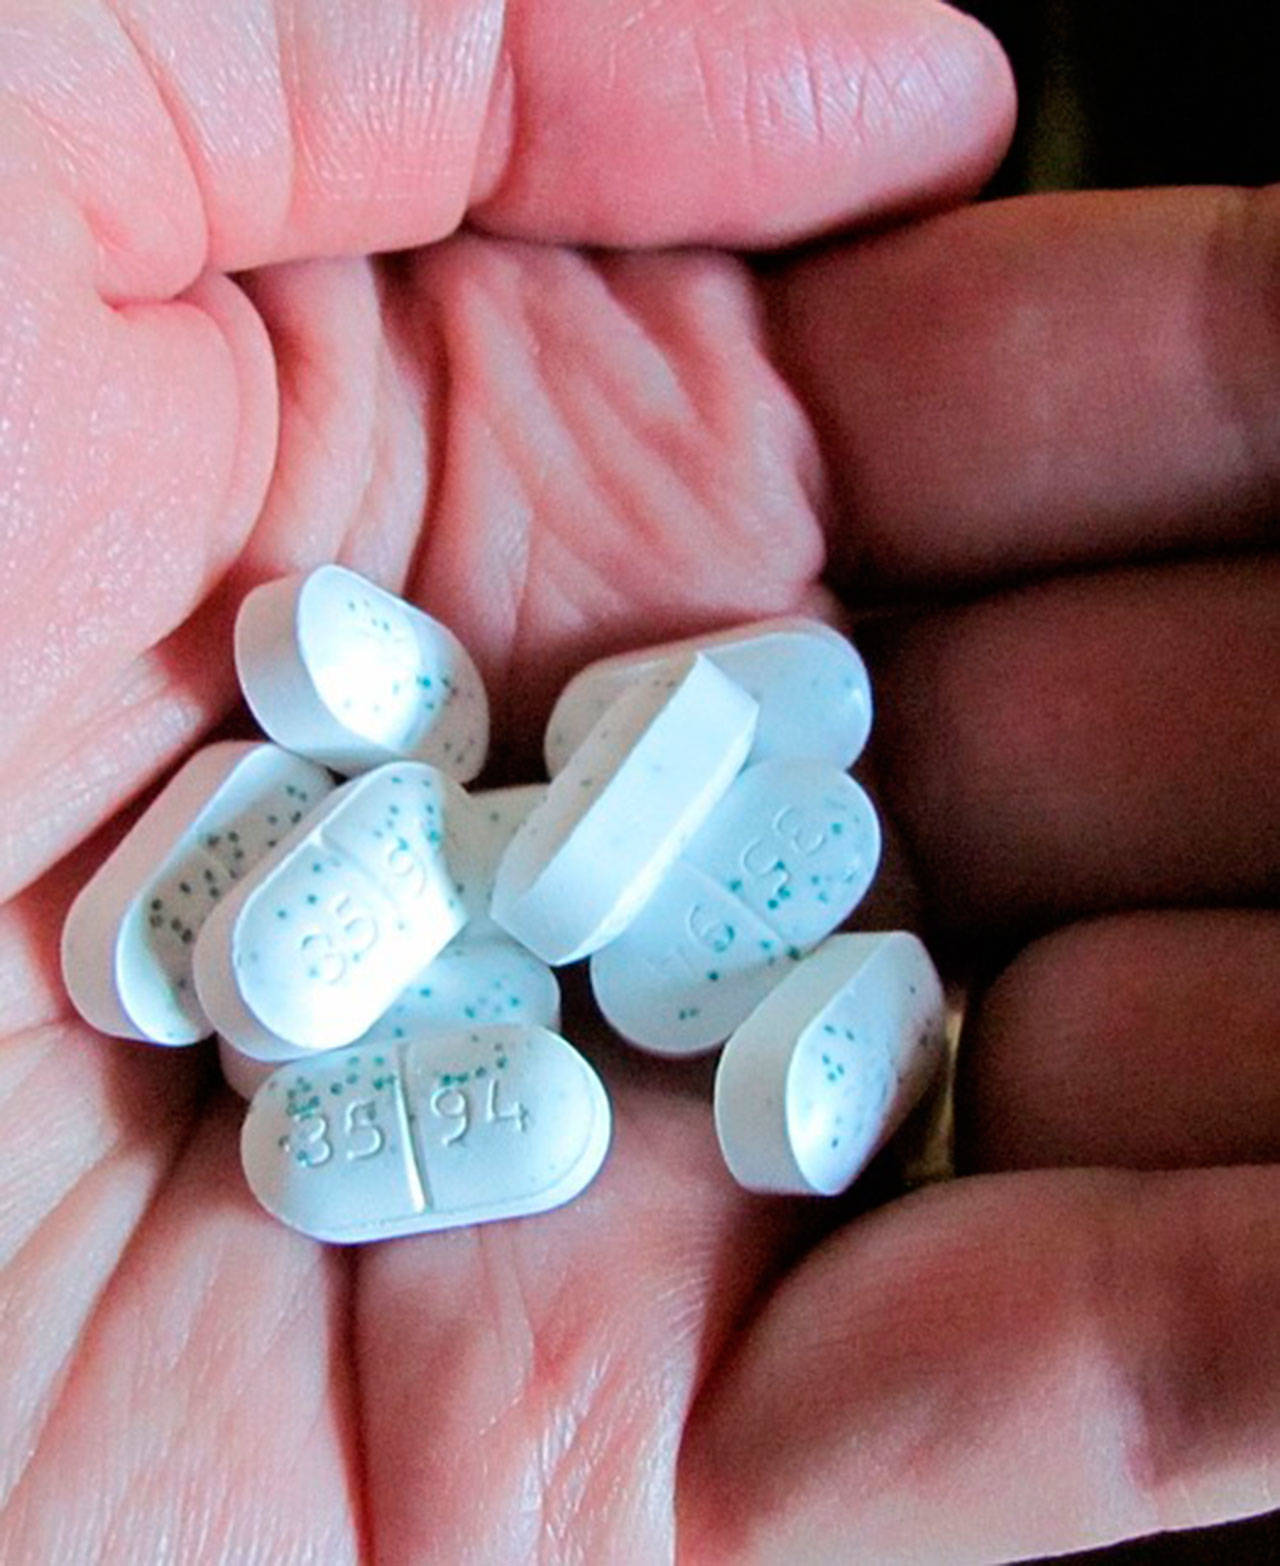 San Juan County joins lawsuit against manufacturers and distributors of prescription opioids